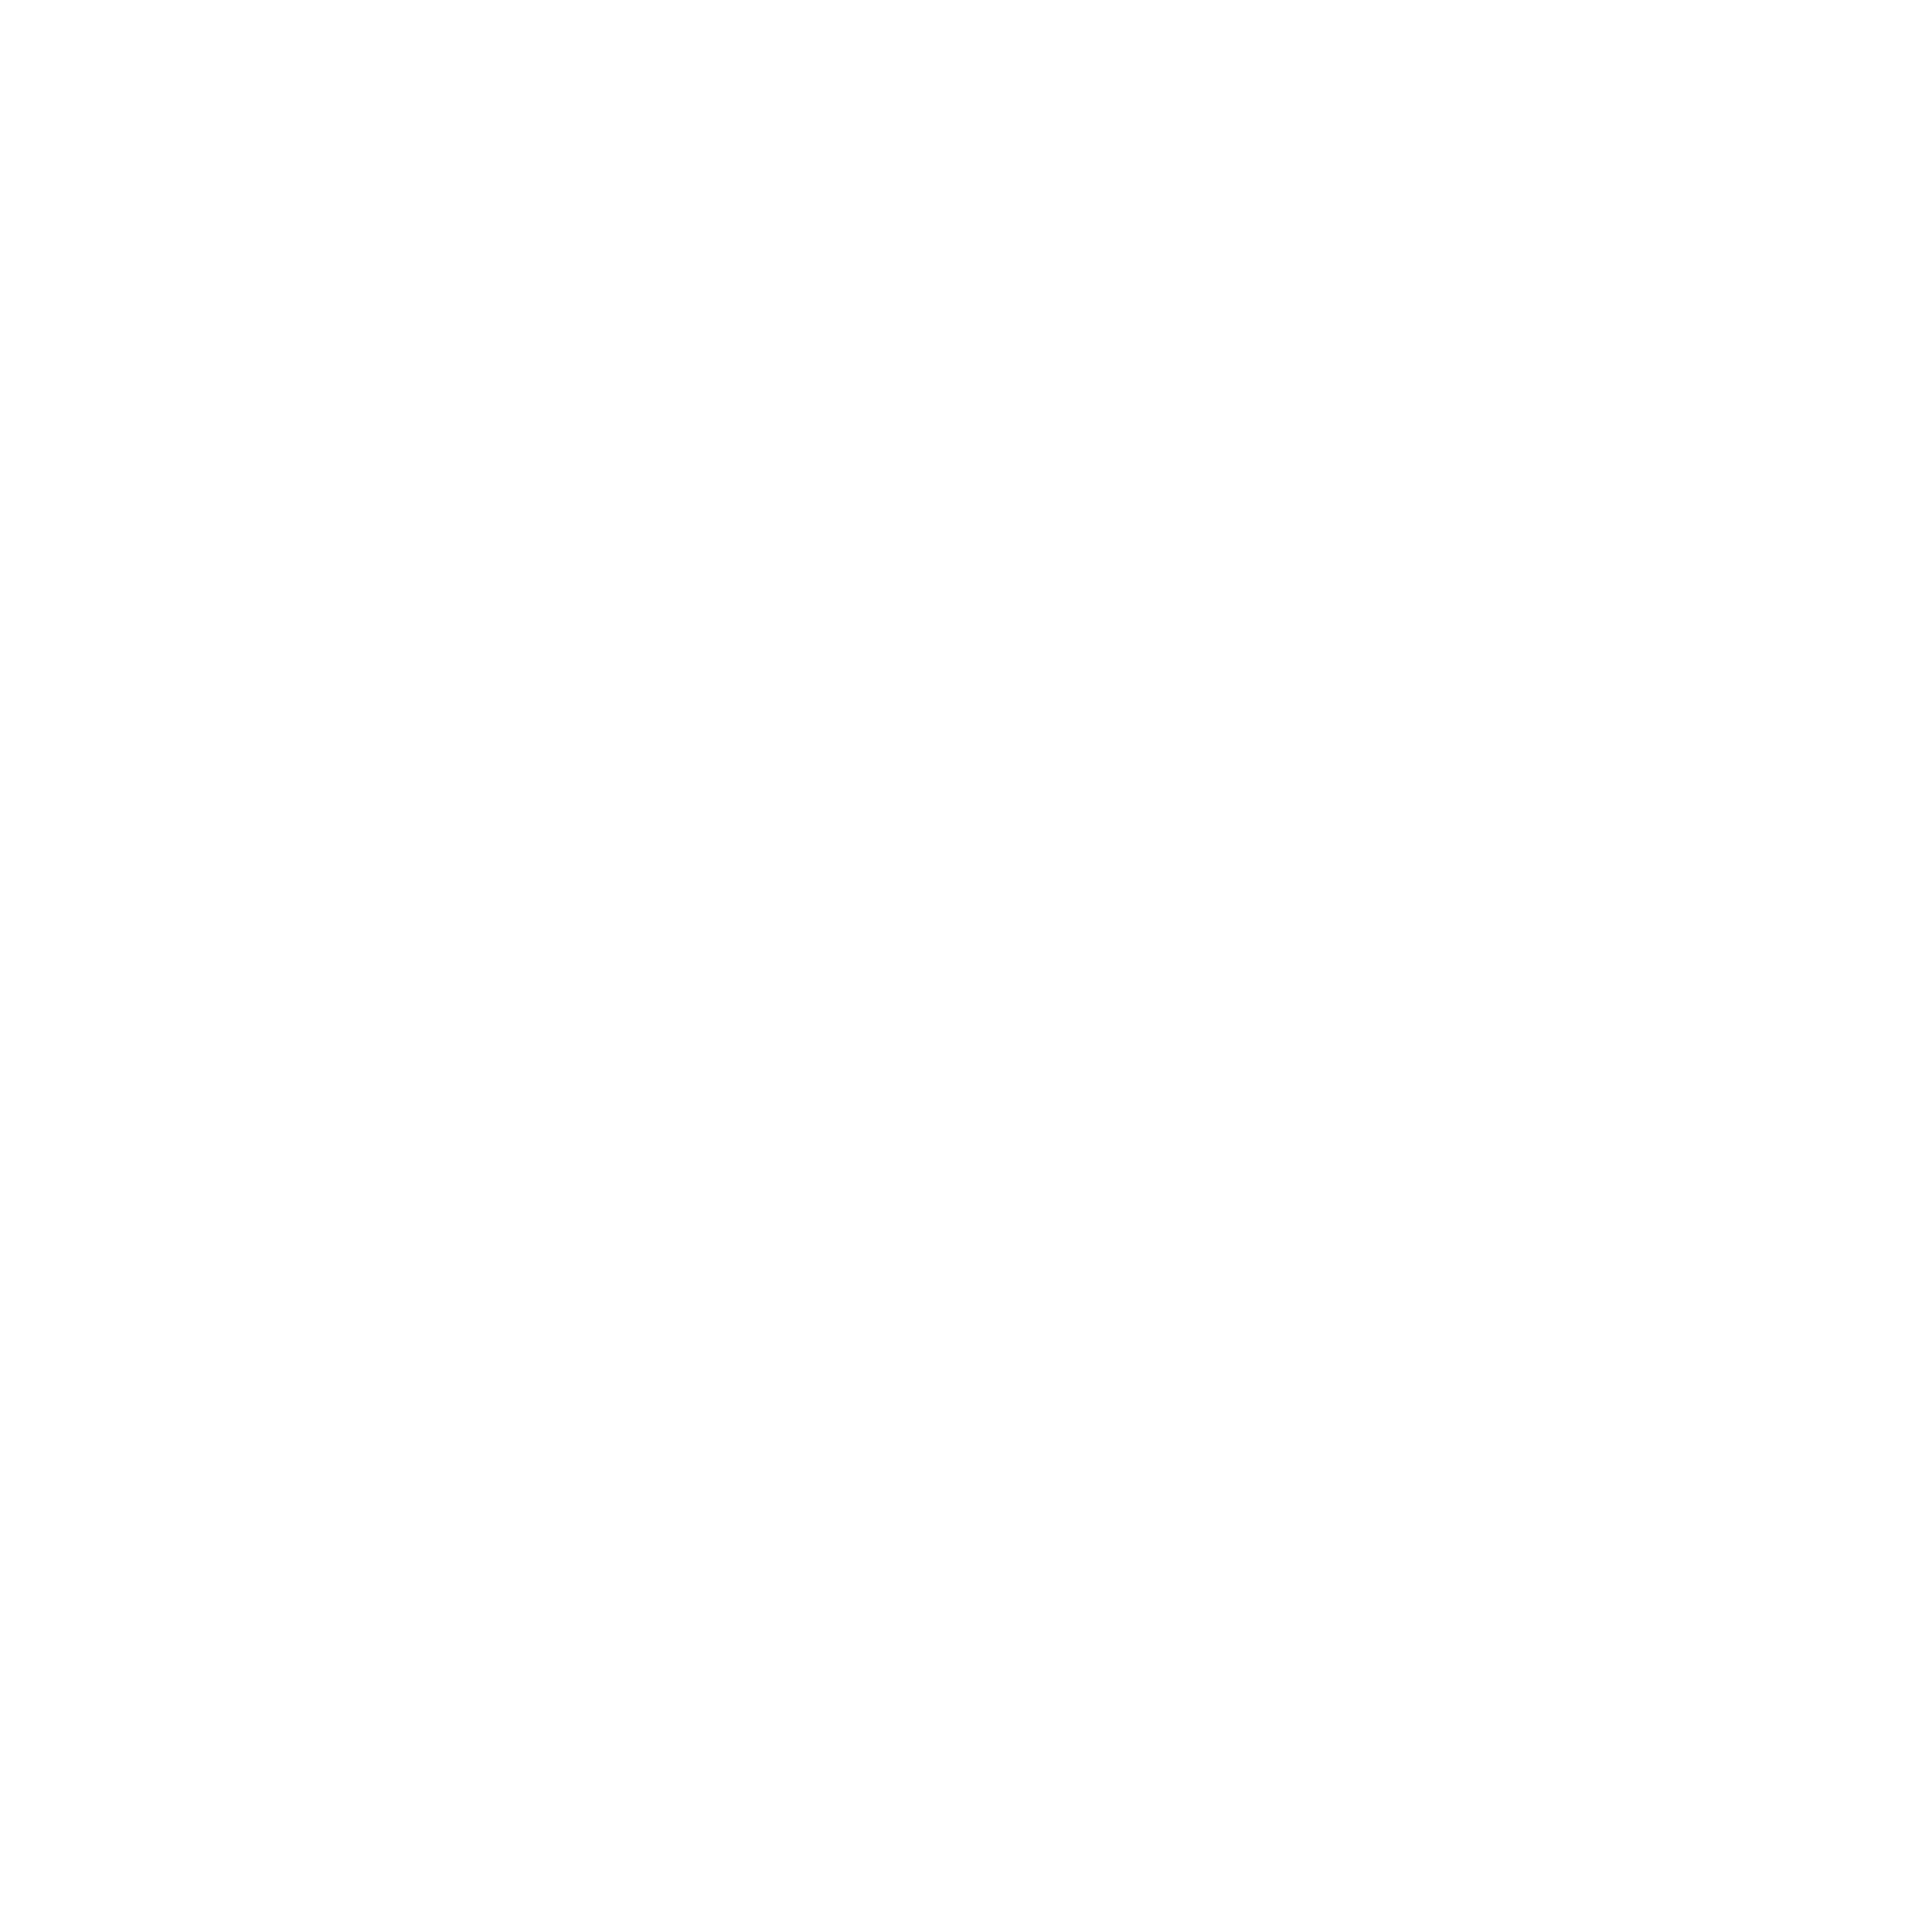 Womens Healing Sanctuary logo<br />
